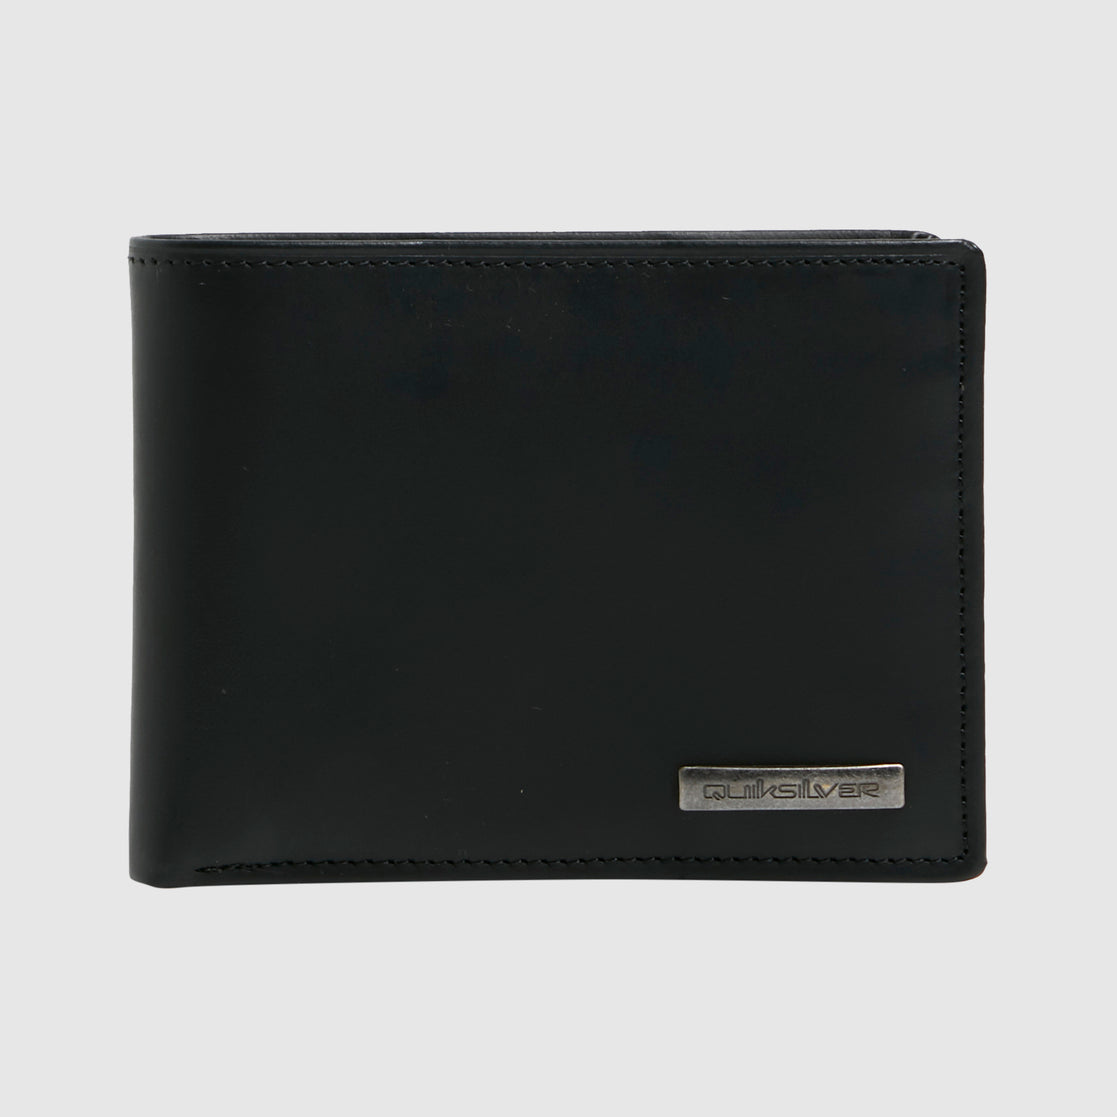 Quiksilver Guthrie IV Bi-fold Leather Wallets